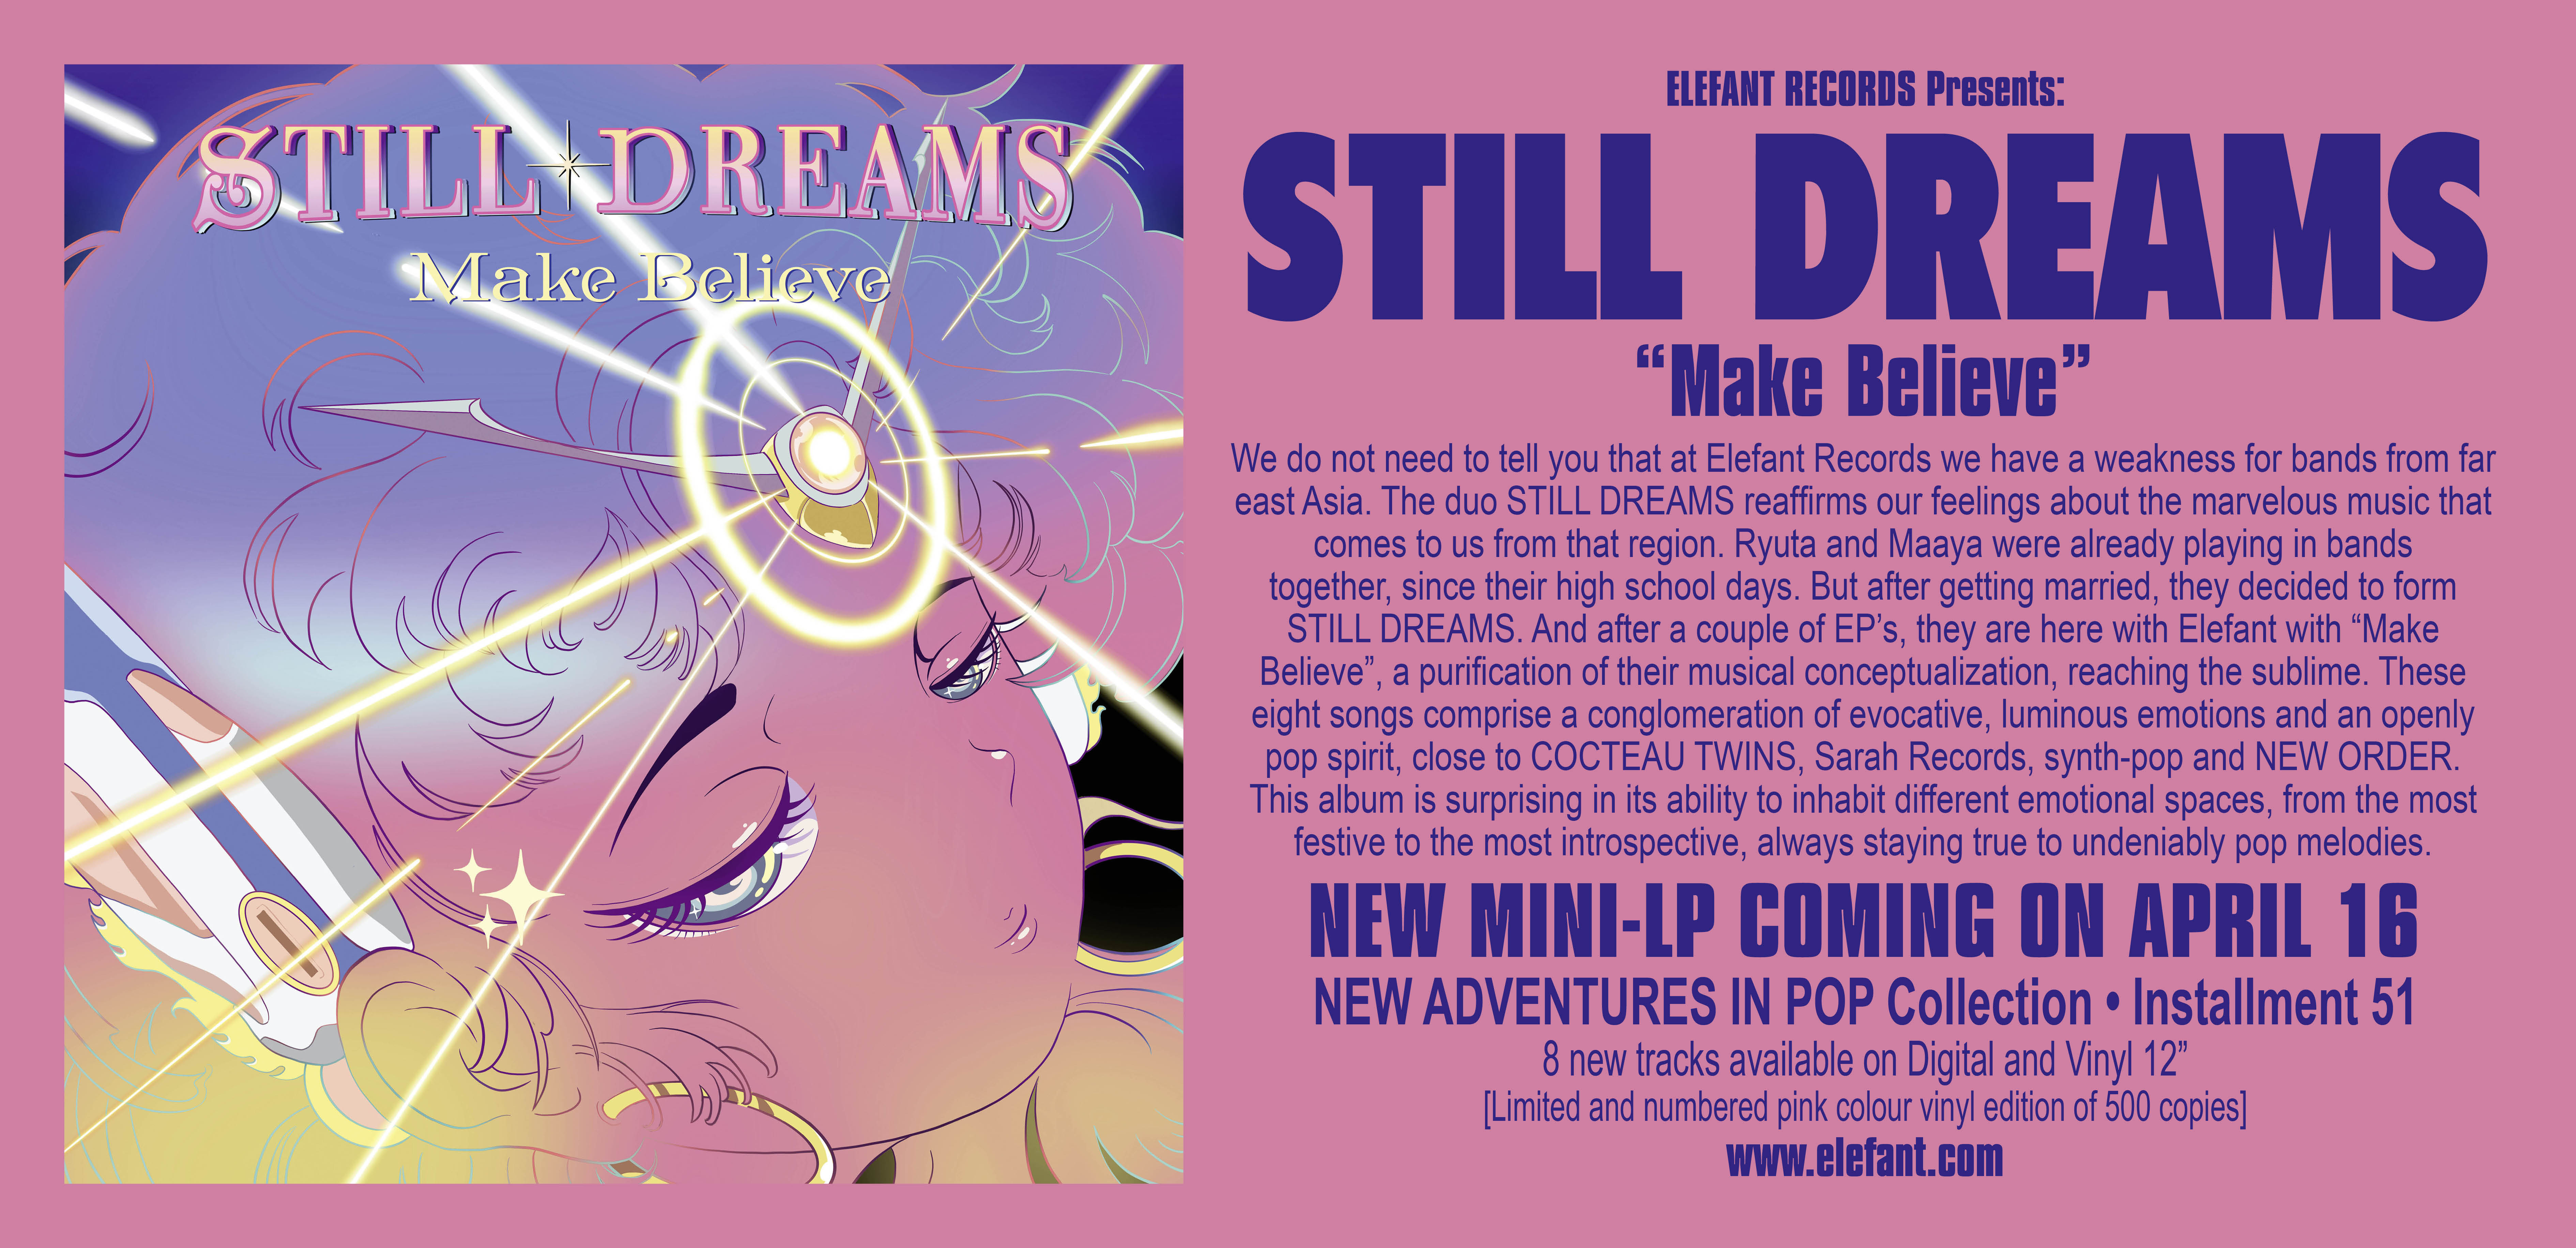 Still Dreams "Make Believe" Mini-LP